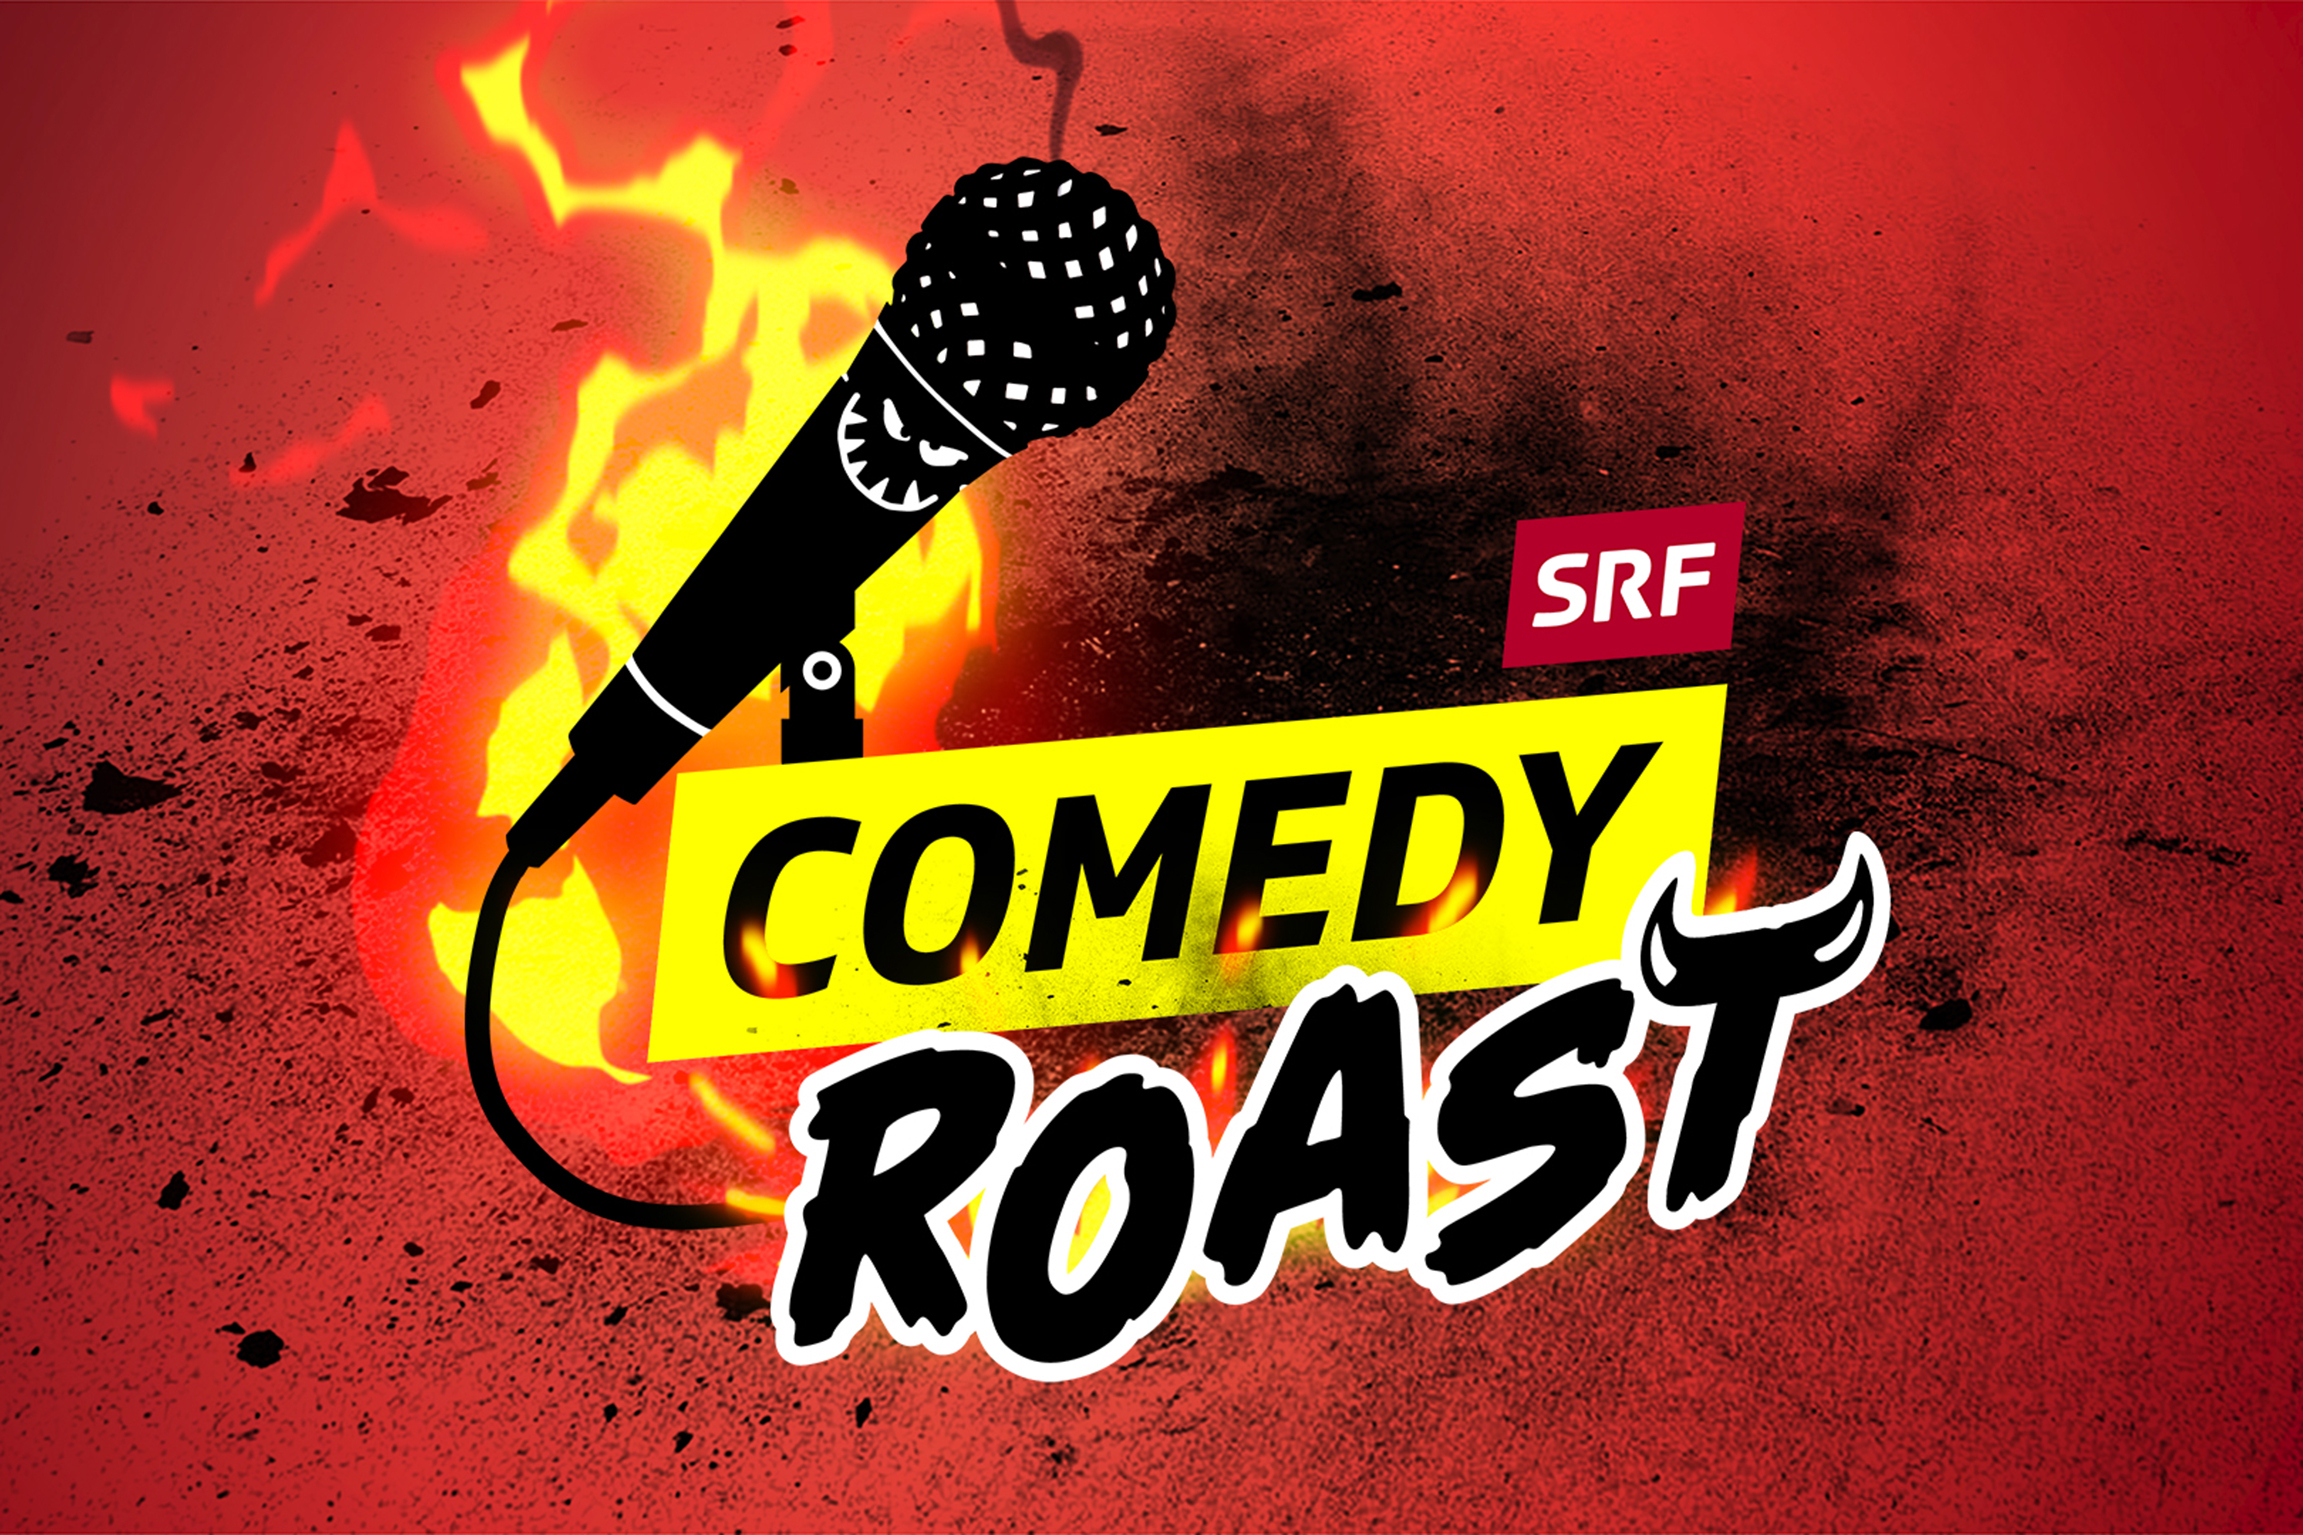 SRF Comedy Roast Keyvisual 2020